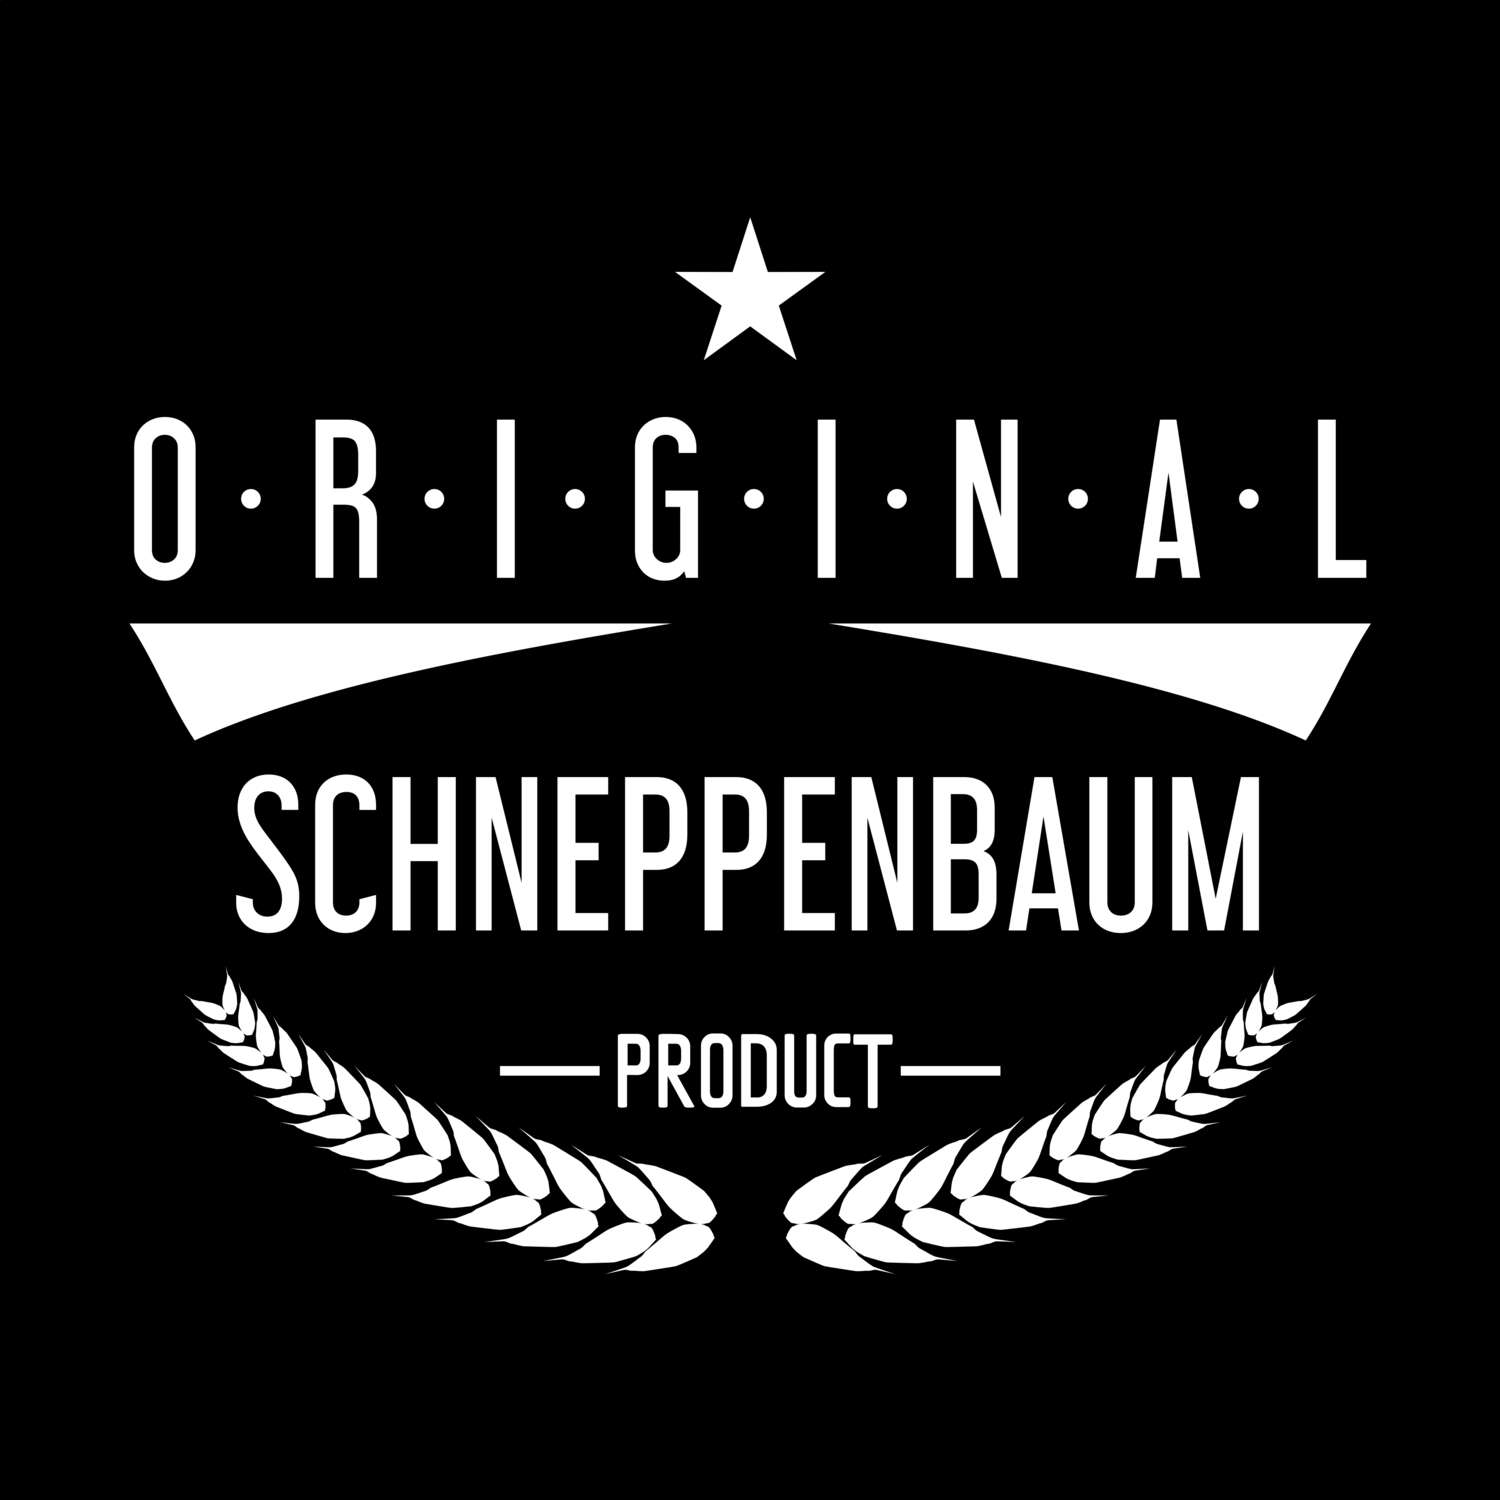 Schneppenbaum T-Shirt »Original Product«